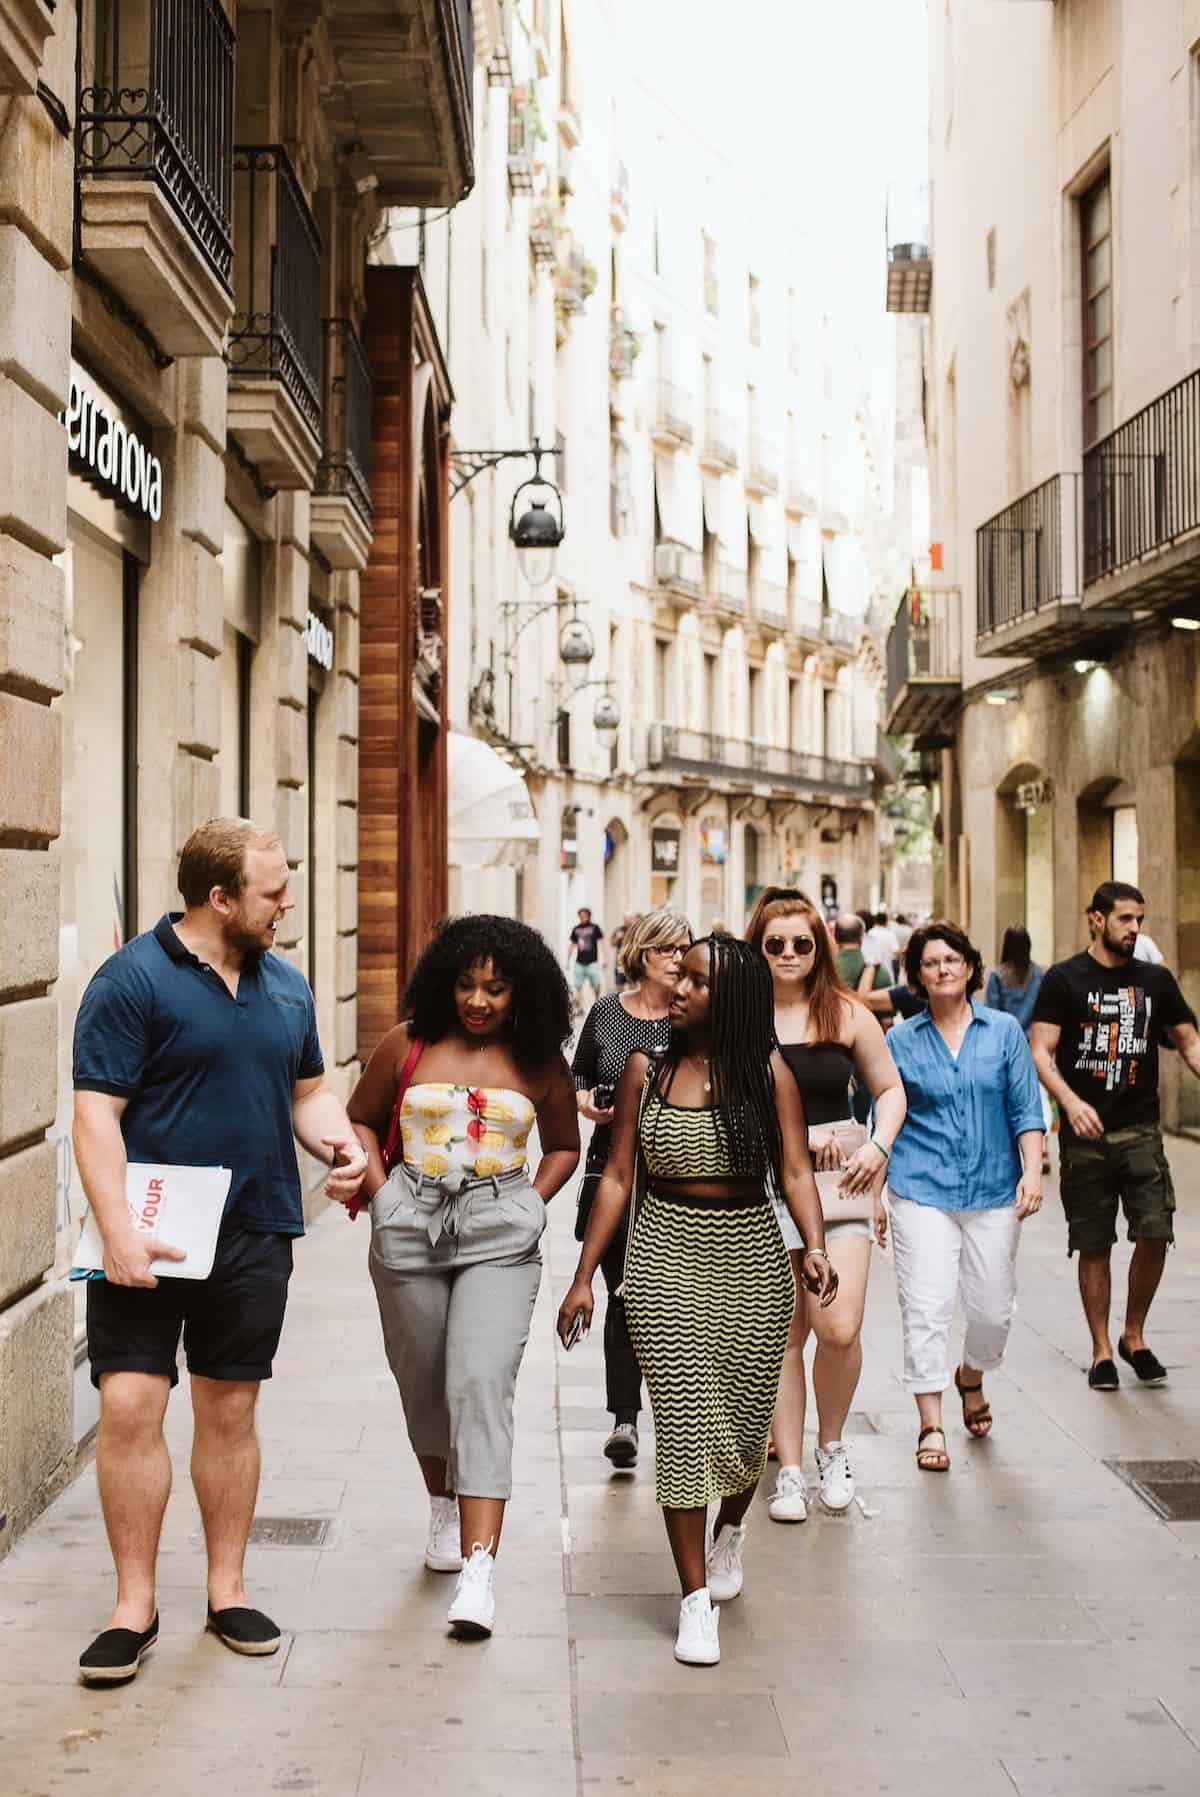 Group of people walking through an urban area